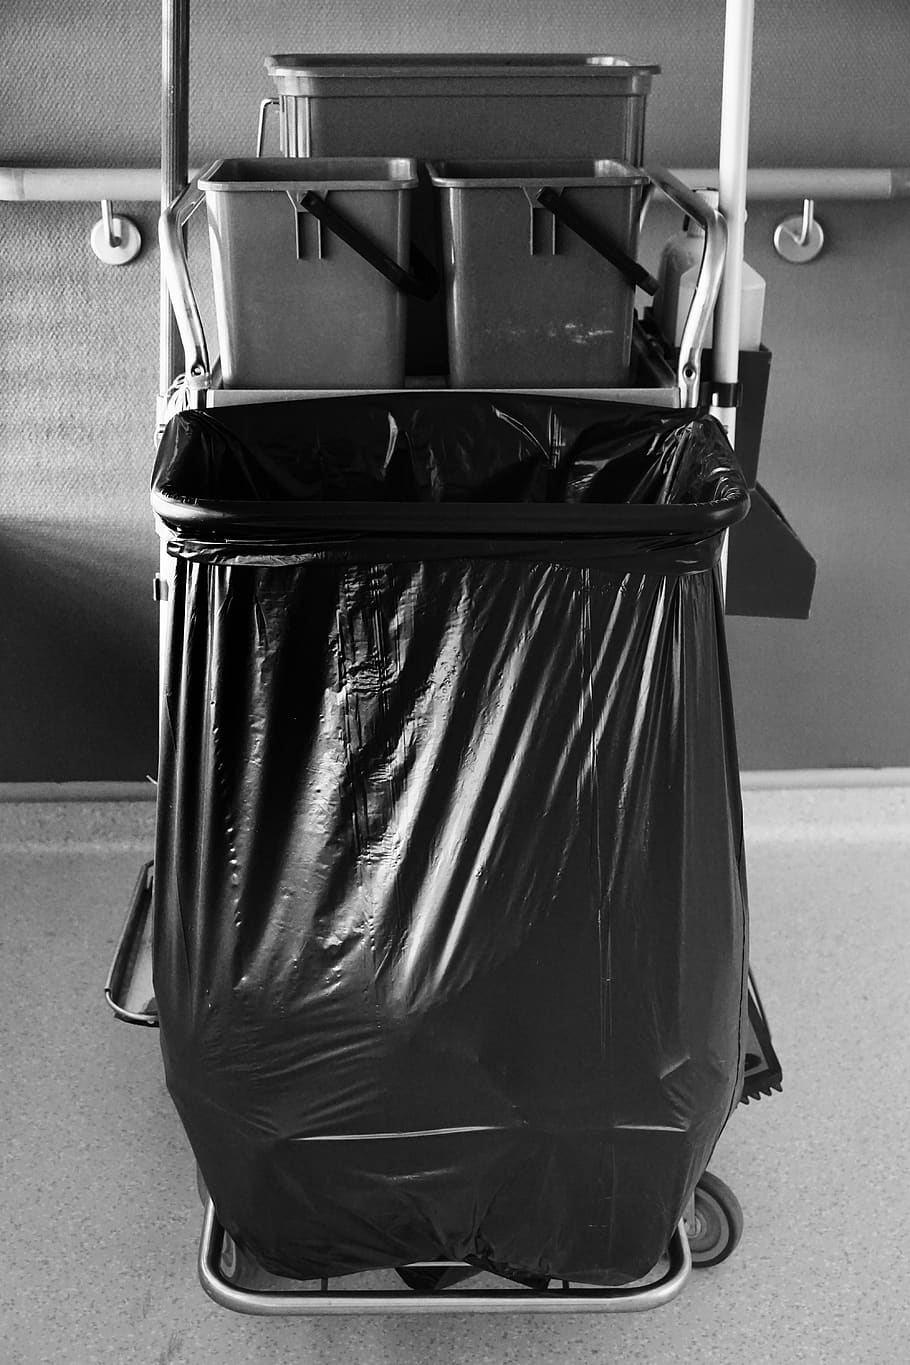 plastic, trash, cleanliness, waste, garbage, bag, black and white, cleaning, indoors, garbage bin